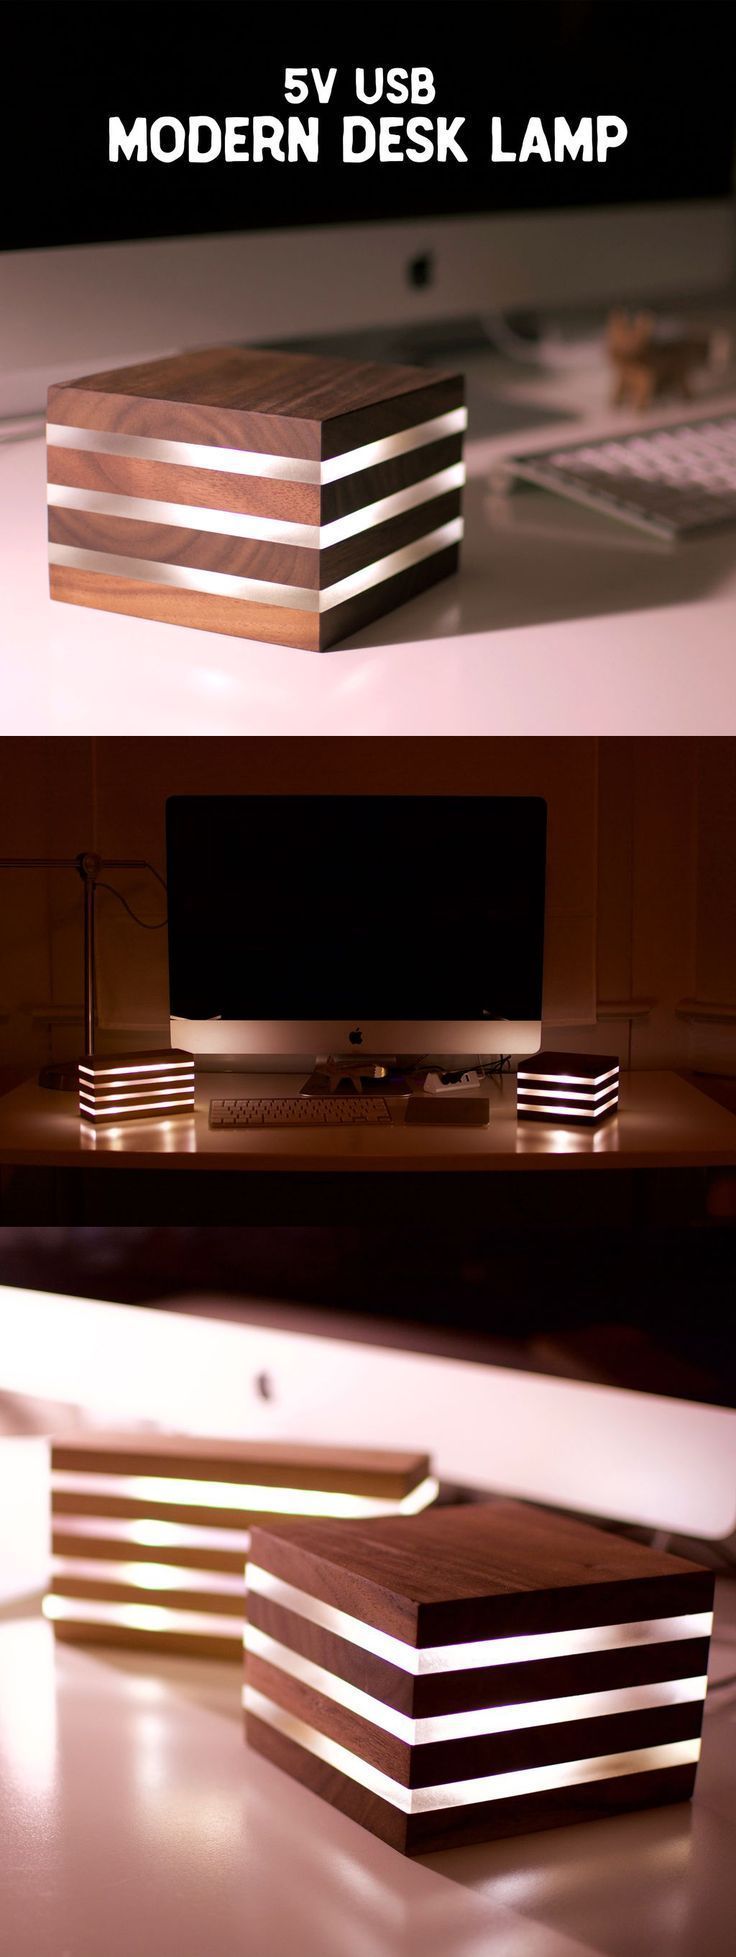 Moderne LED Schreibtischlampe… Betrieb avec 5V USB - # 5V # Betrieb avec #LE… #WoodWorking - Wood Design